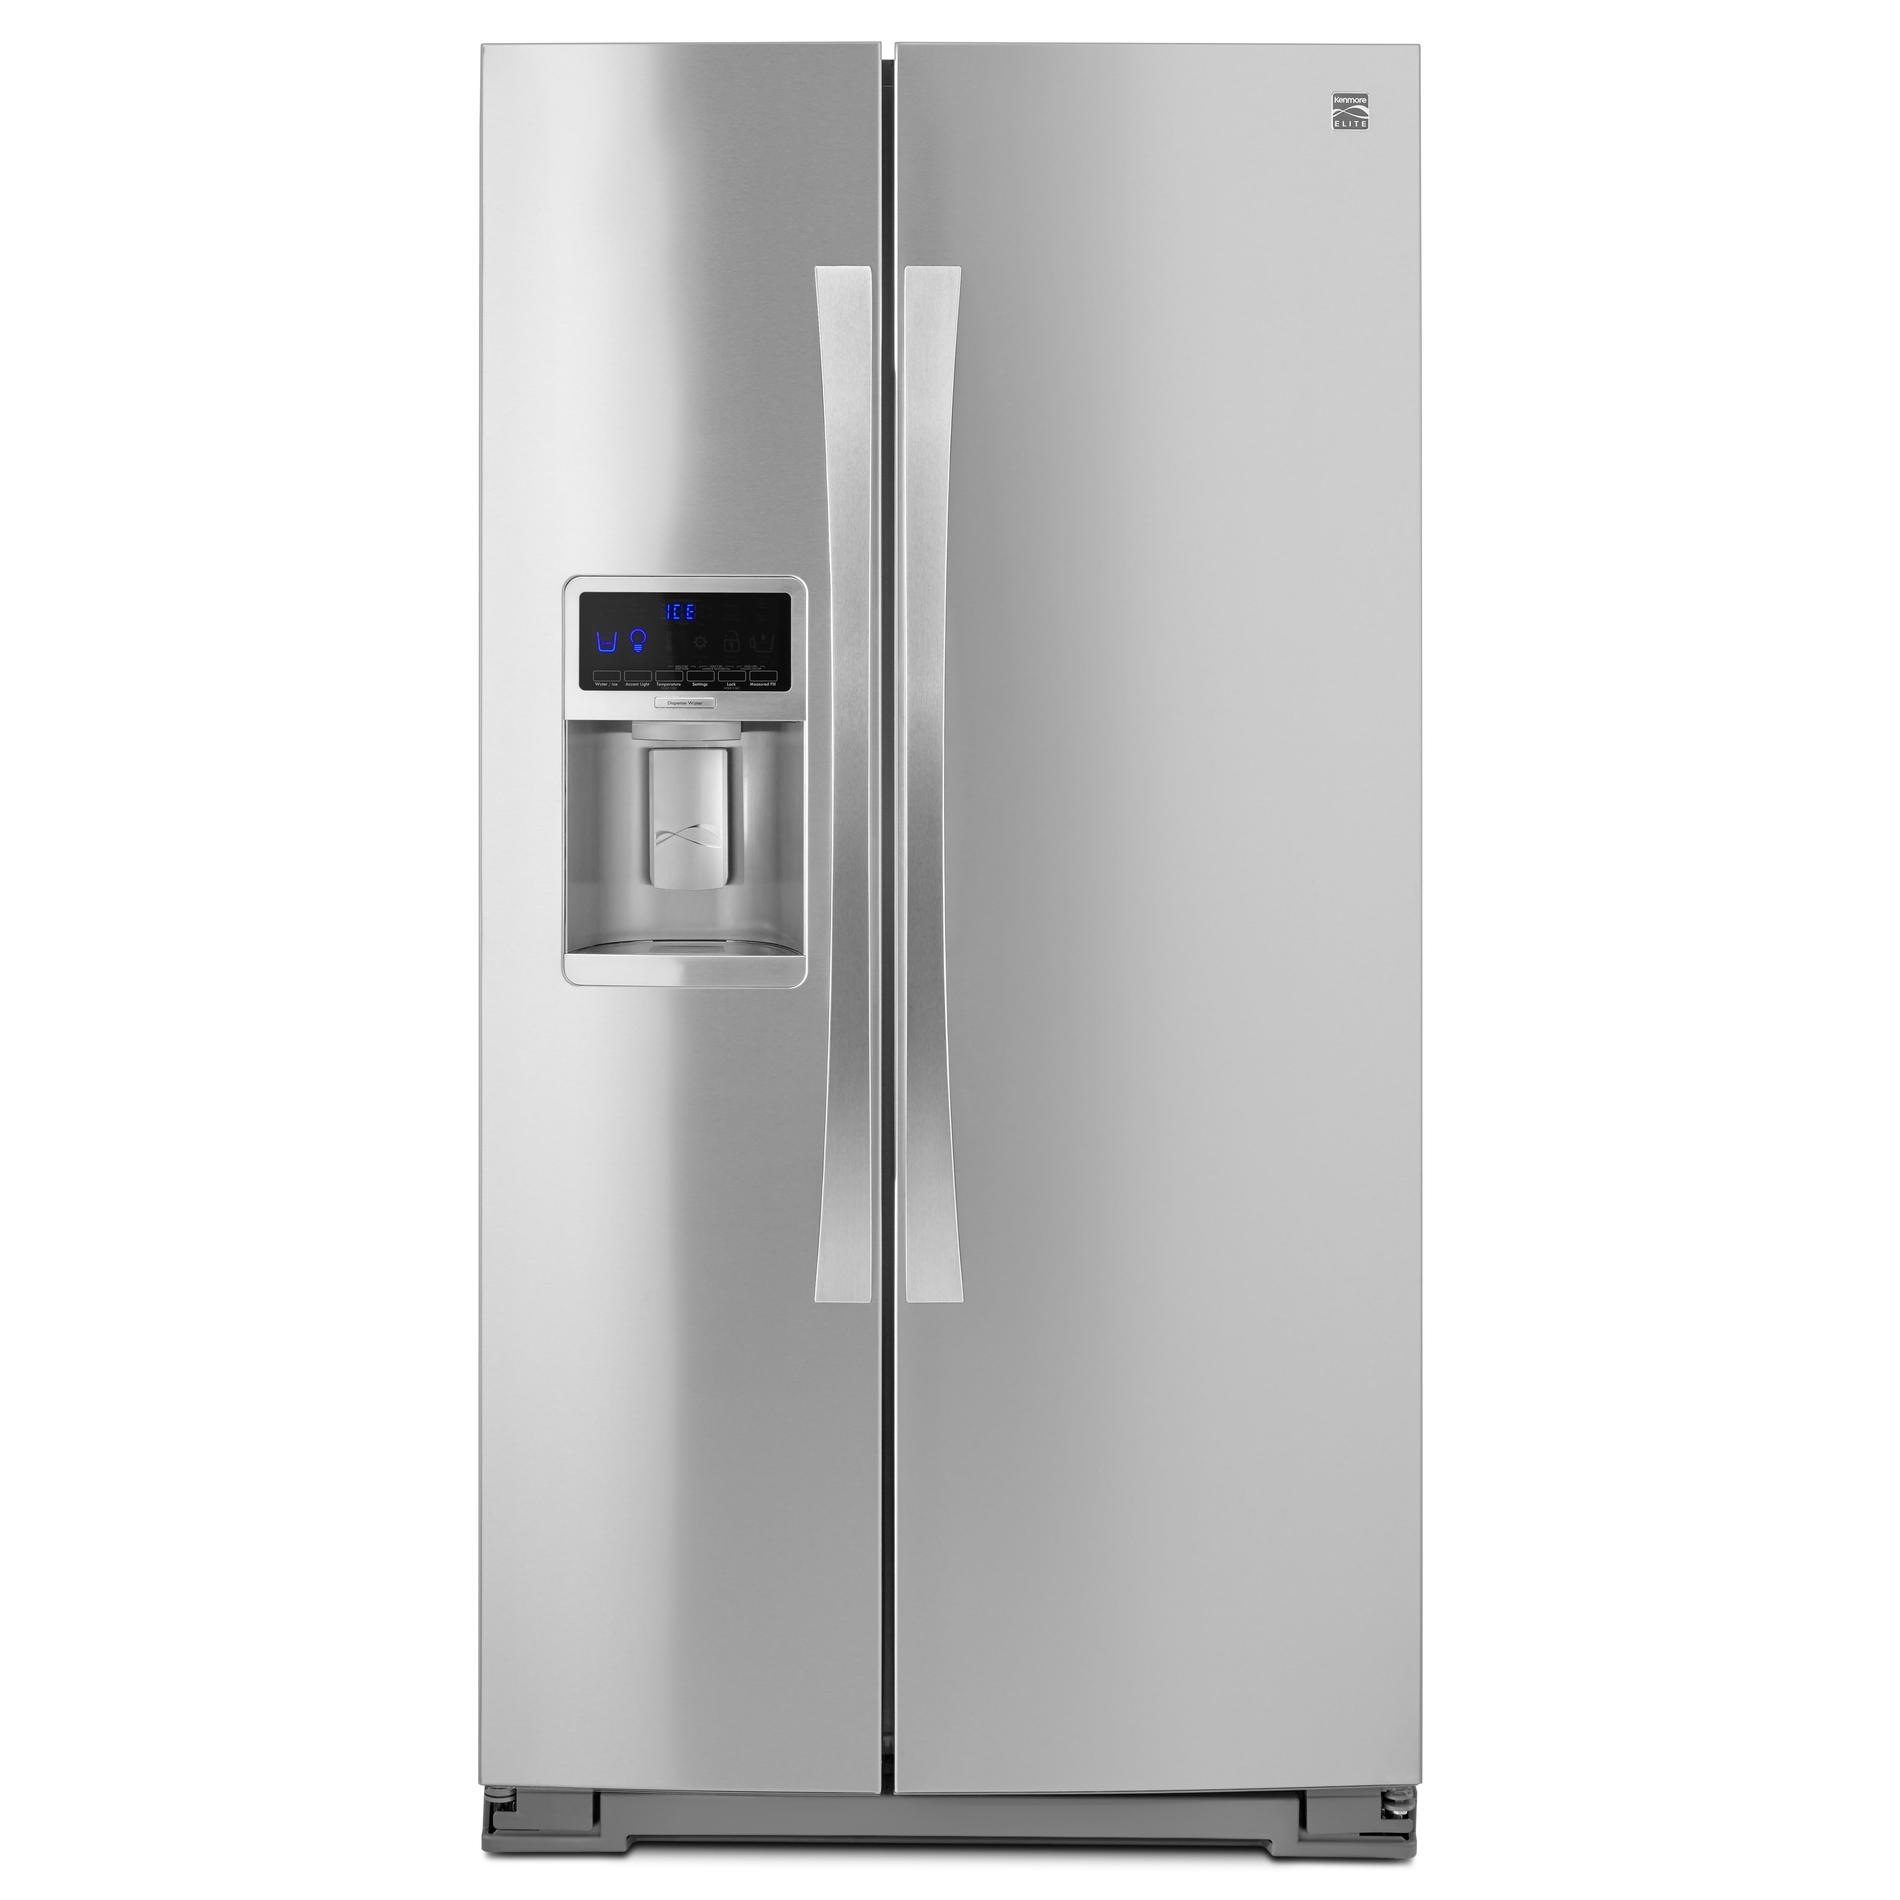 Kenmore Elite 51773 28 cu. ft. Side-by-Side Refrigerator - Stainless Steel Kenmore Stainless Steel Refrigerator Side By Side